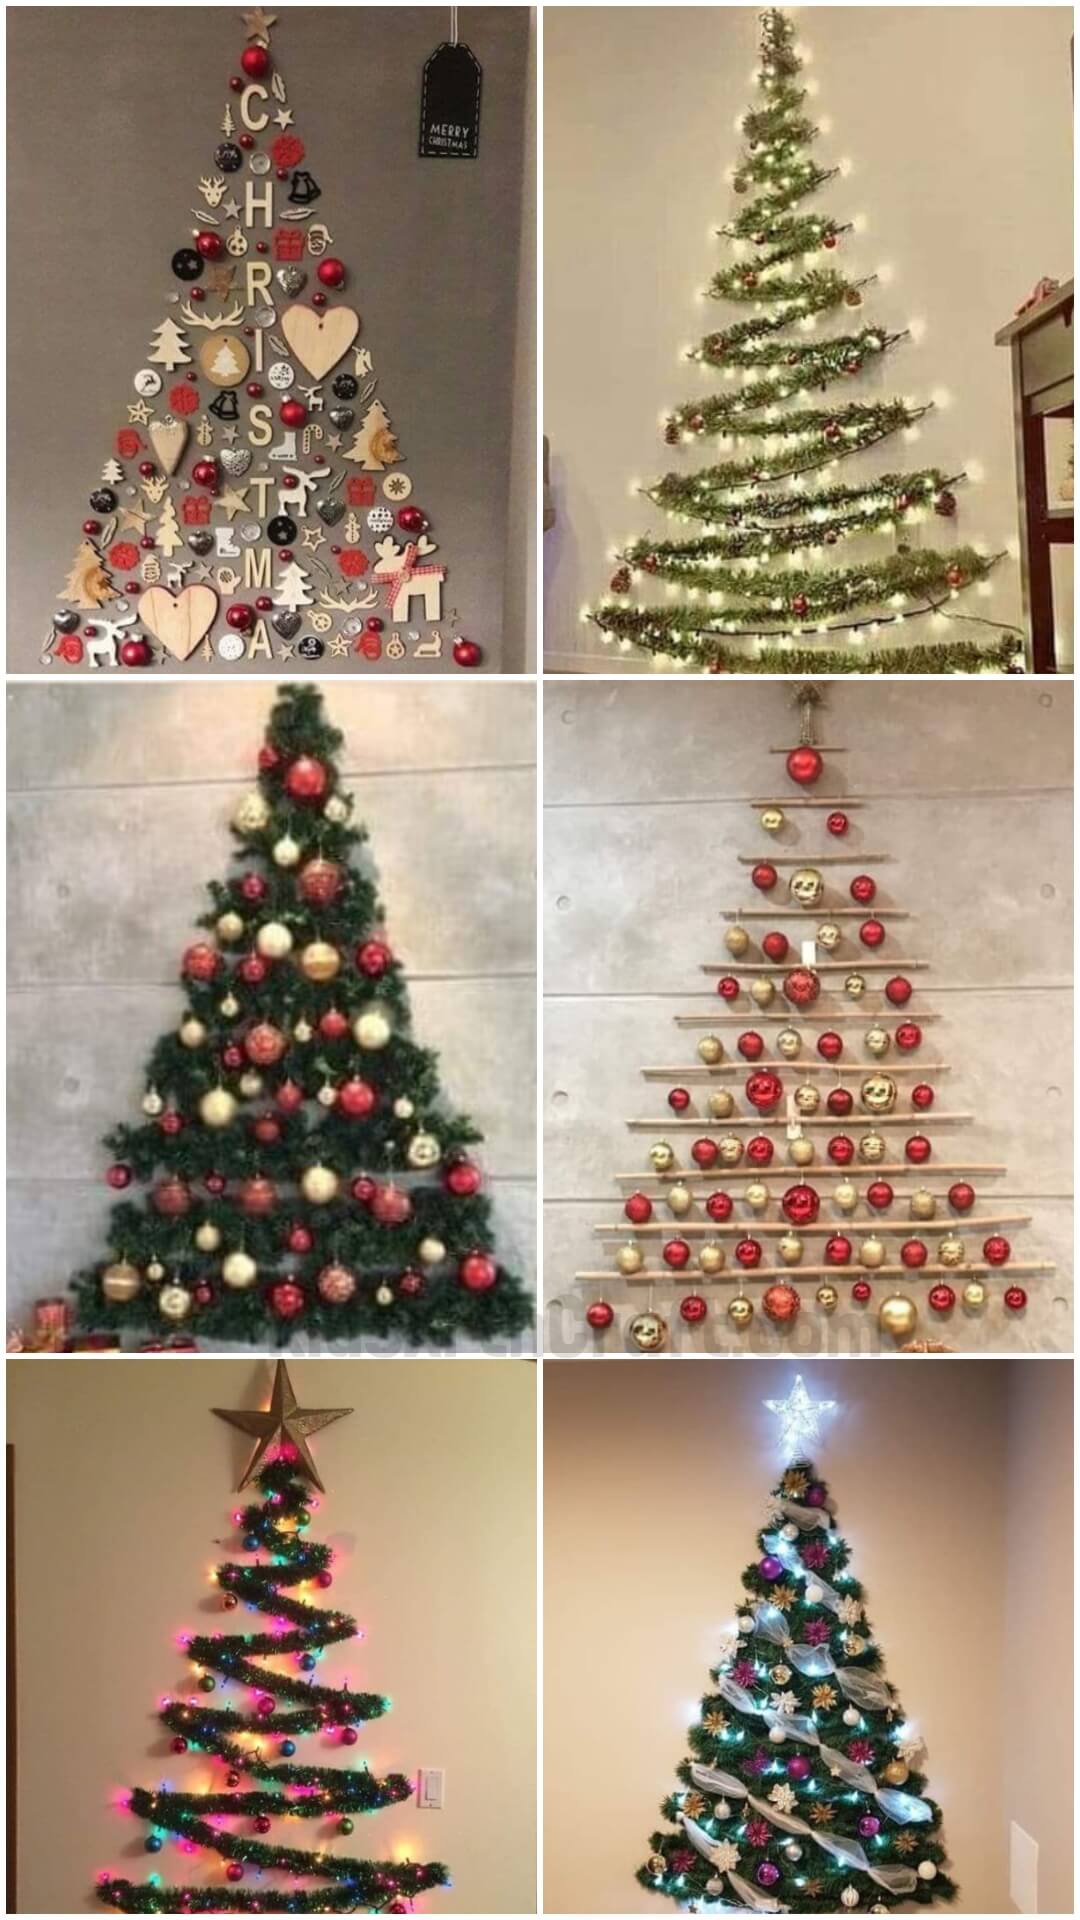 Wall Hanging Christmas Tree Decoration with Lighting